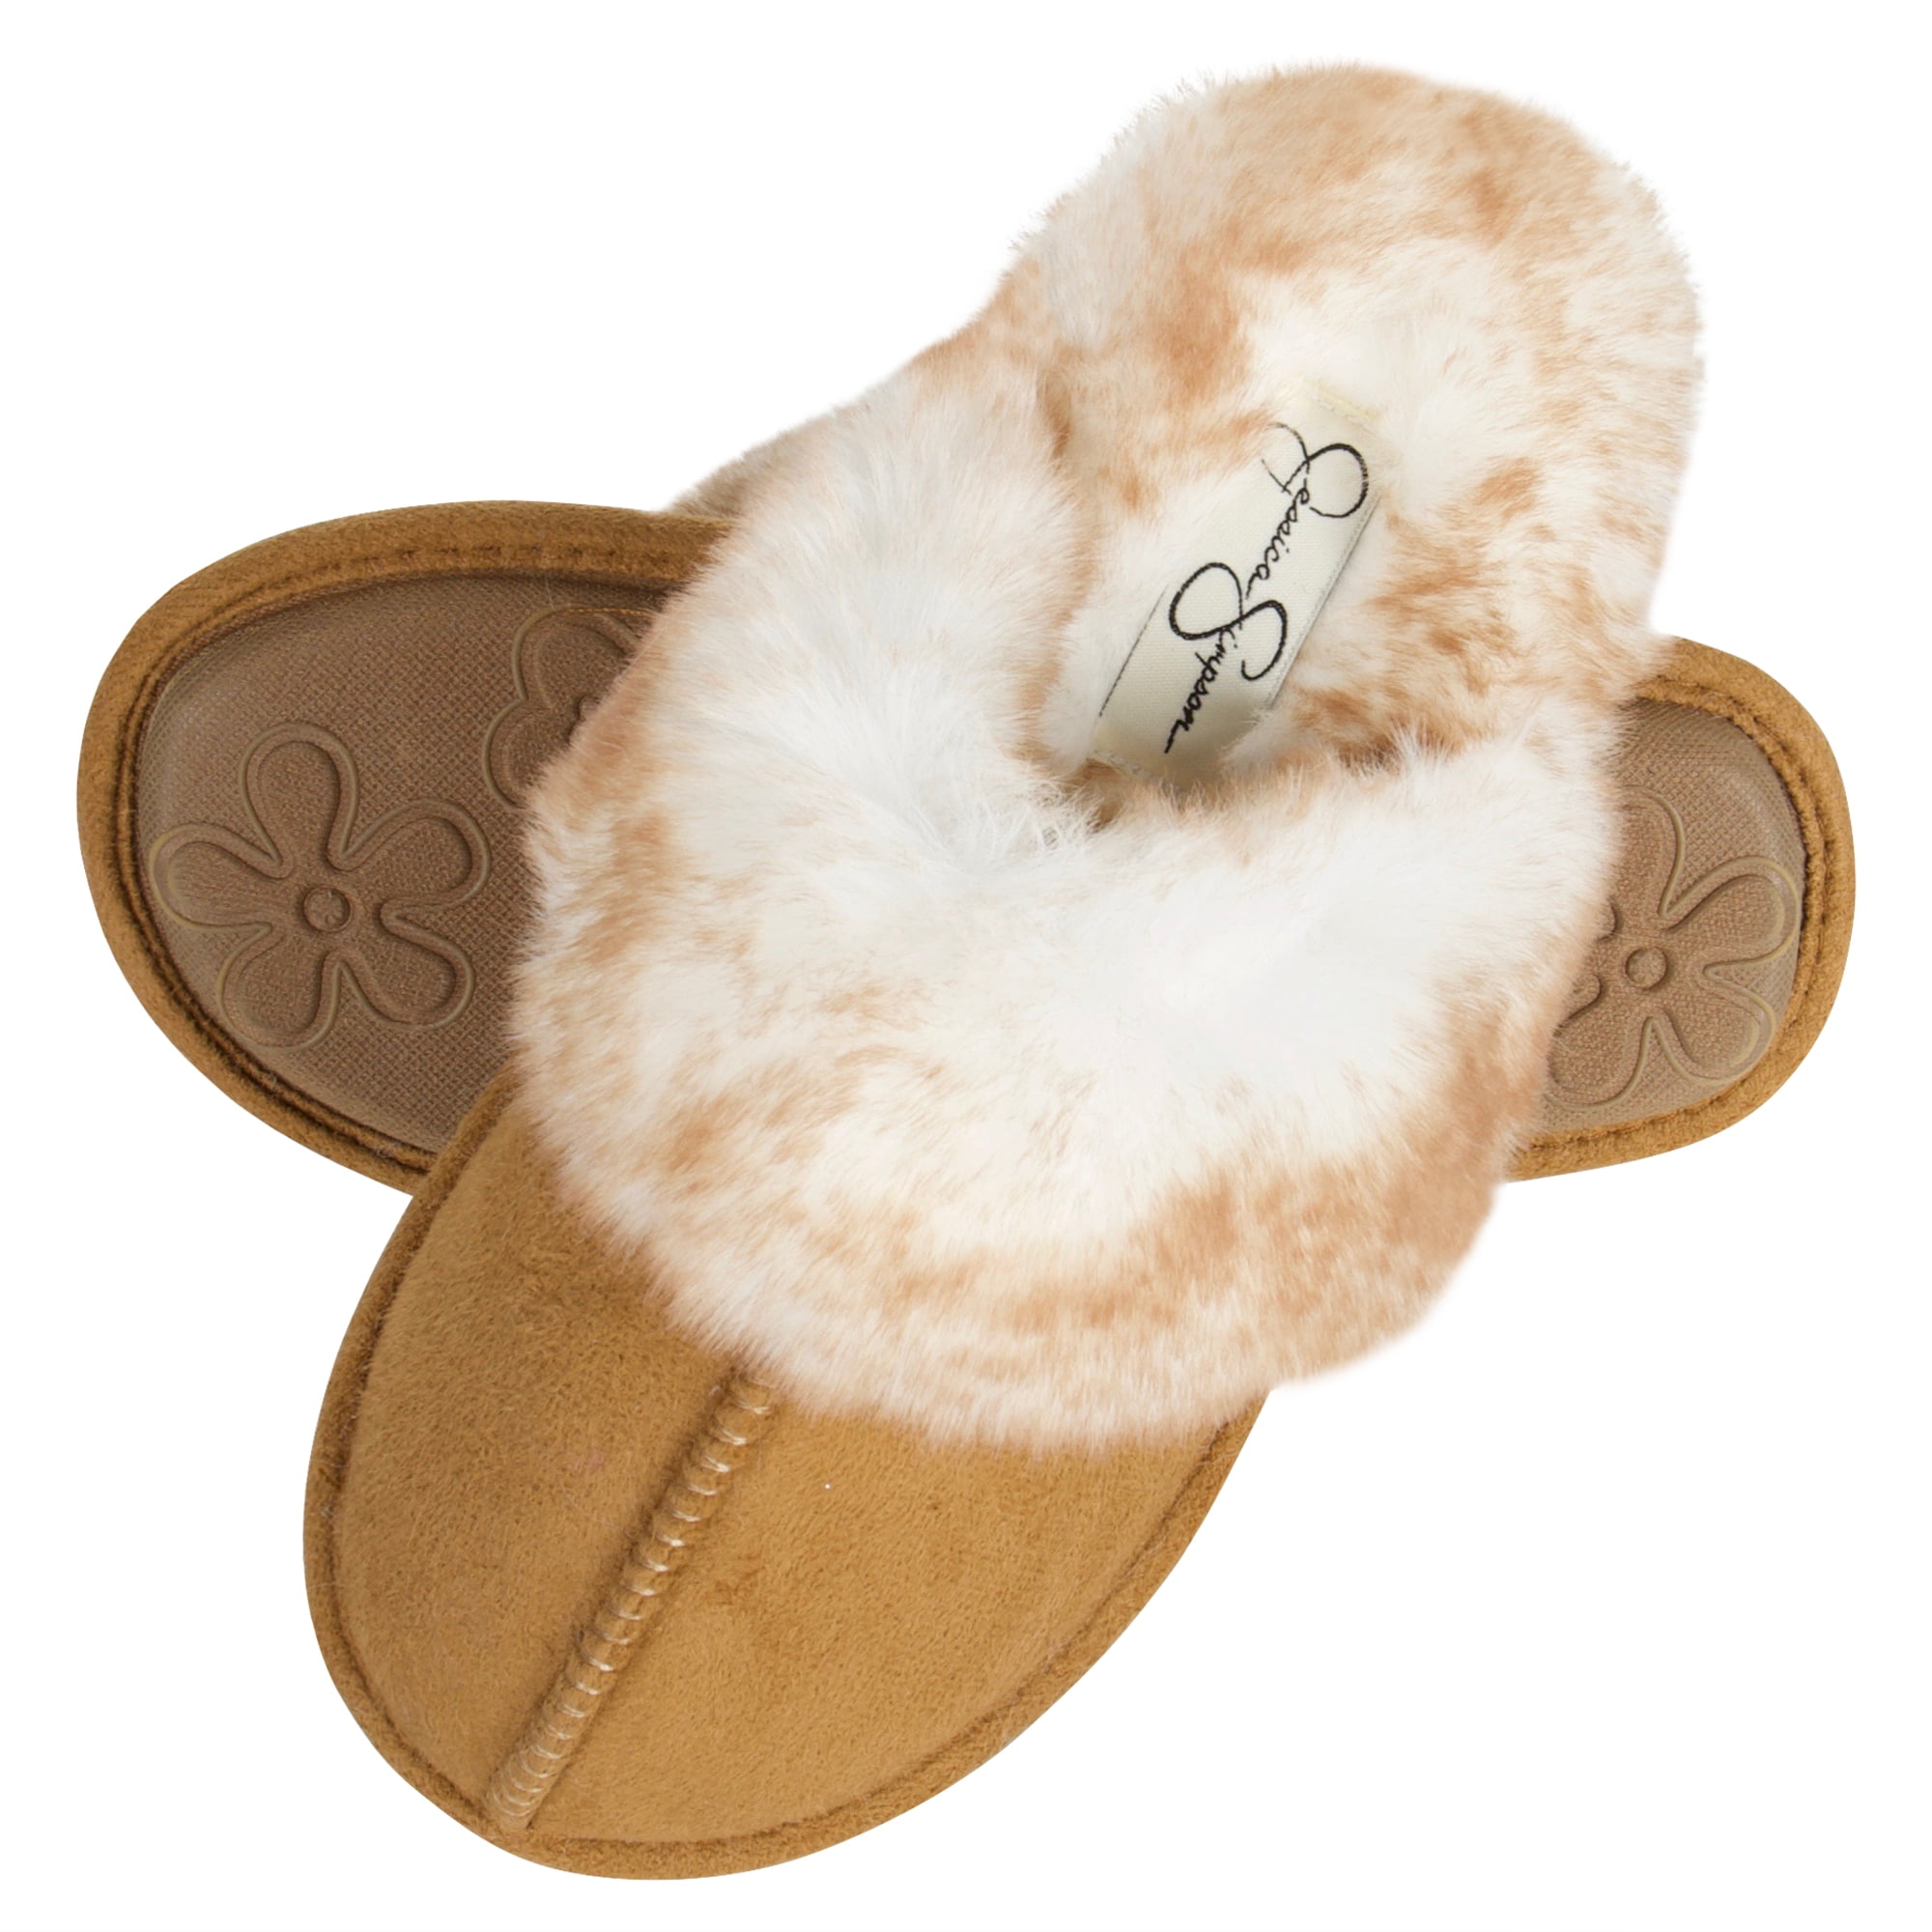 Cozy Warm Memory Foam House Shoe for Kids Jessica Simpson Girls Microsuede Bootie Slipper with Faux Fur Trim 